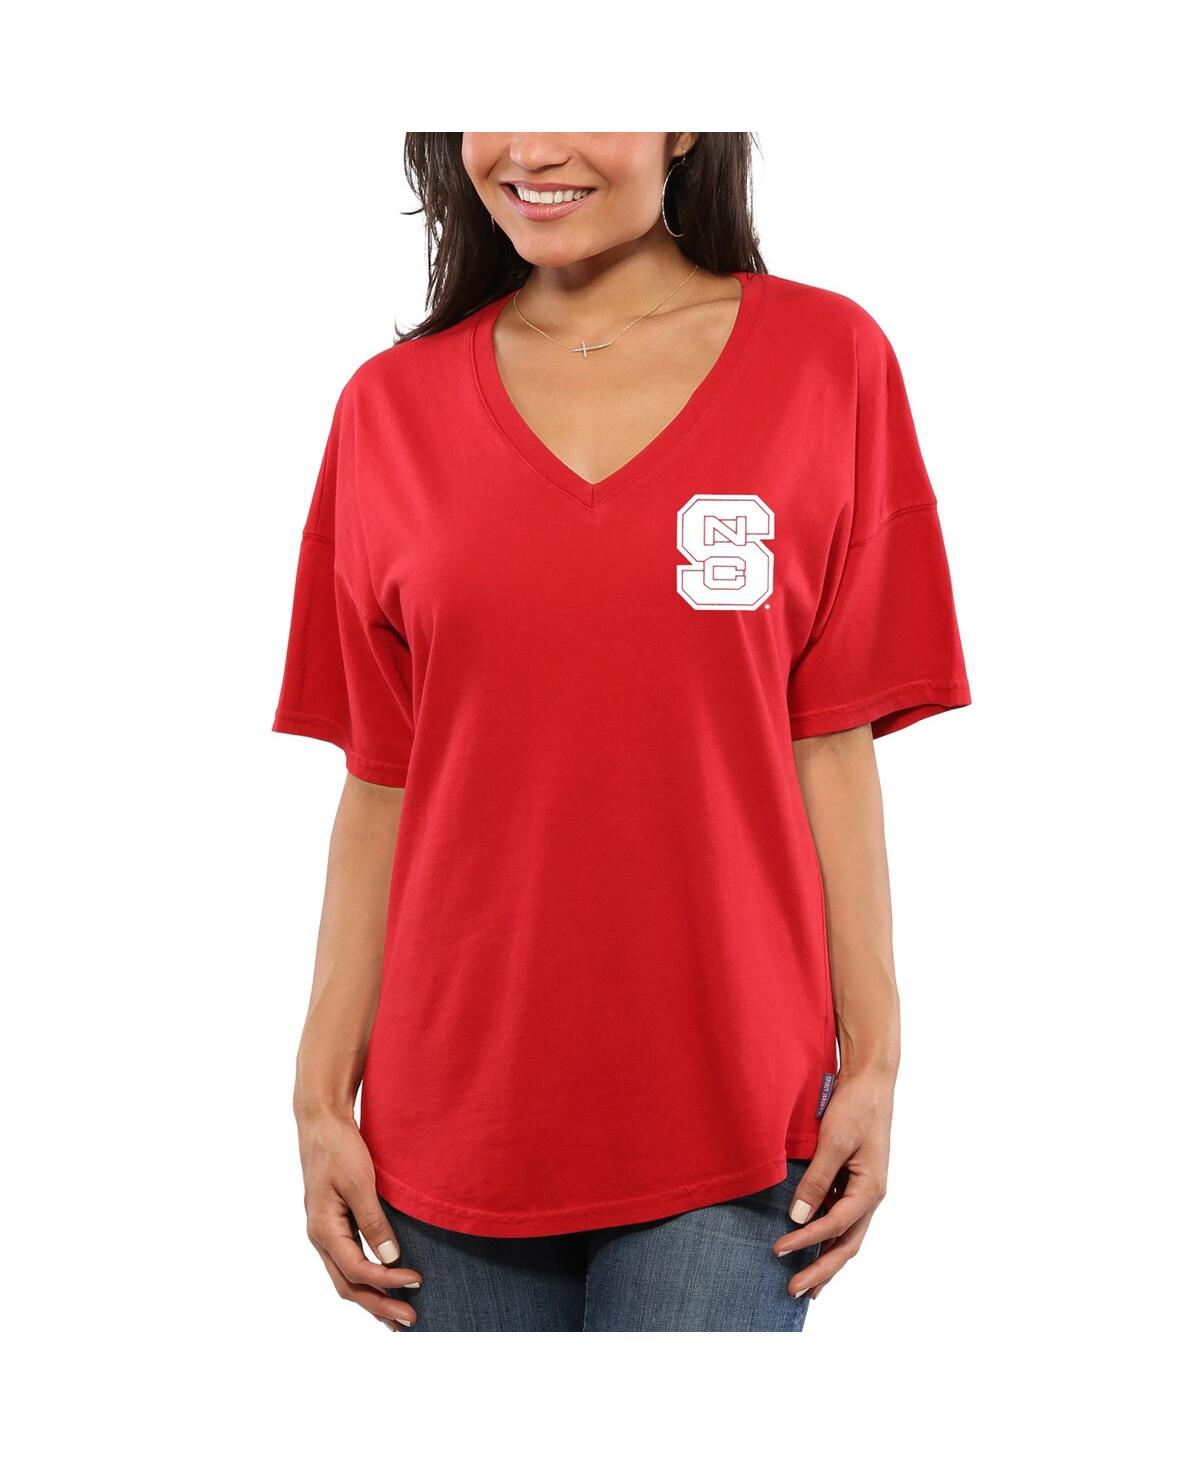 Shop Spirit Jersey Women's Red Nc State Wolfpack  Oversized T-shirt